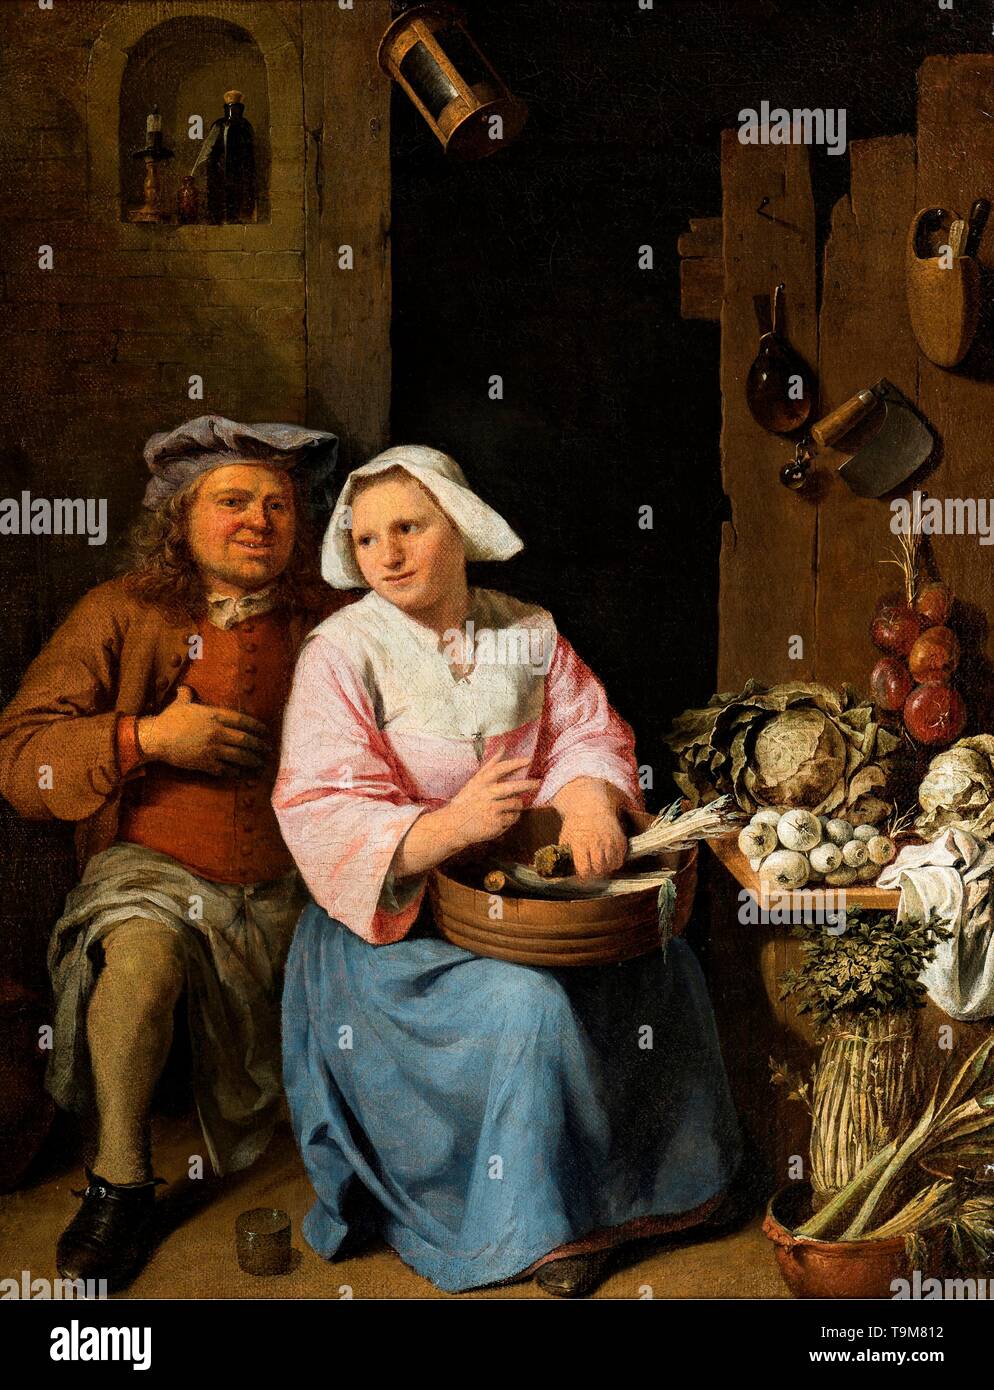 Declaration of love. Museum: Nivaagaards Malerisamling. Author: Nicolaes van Haeften. Stock Photo